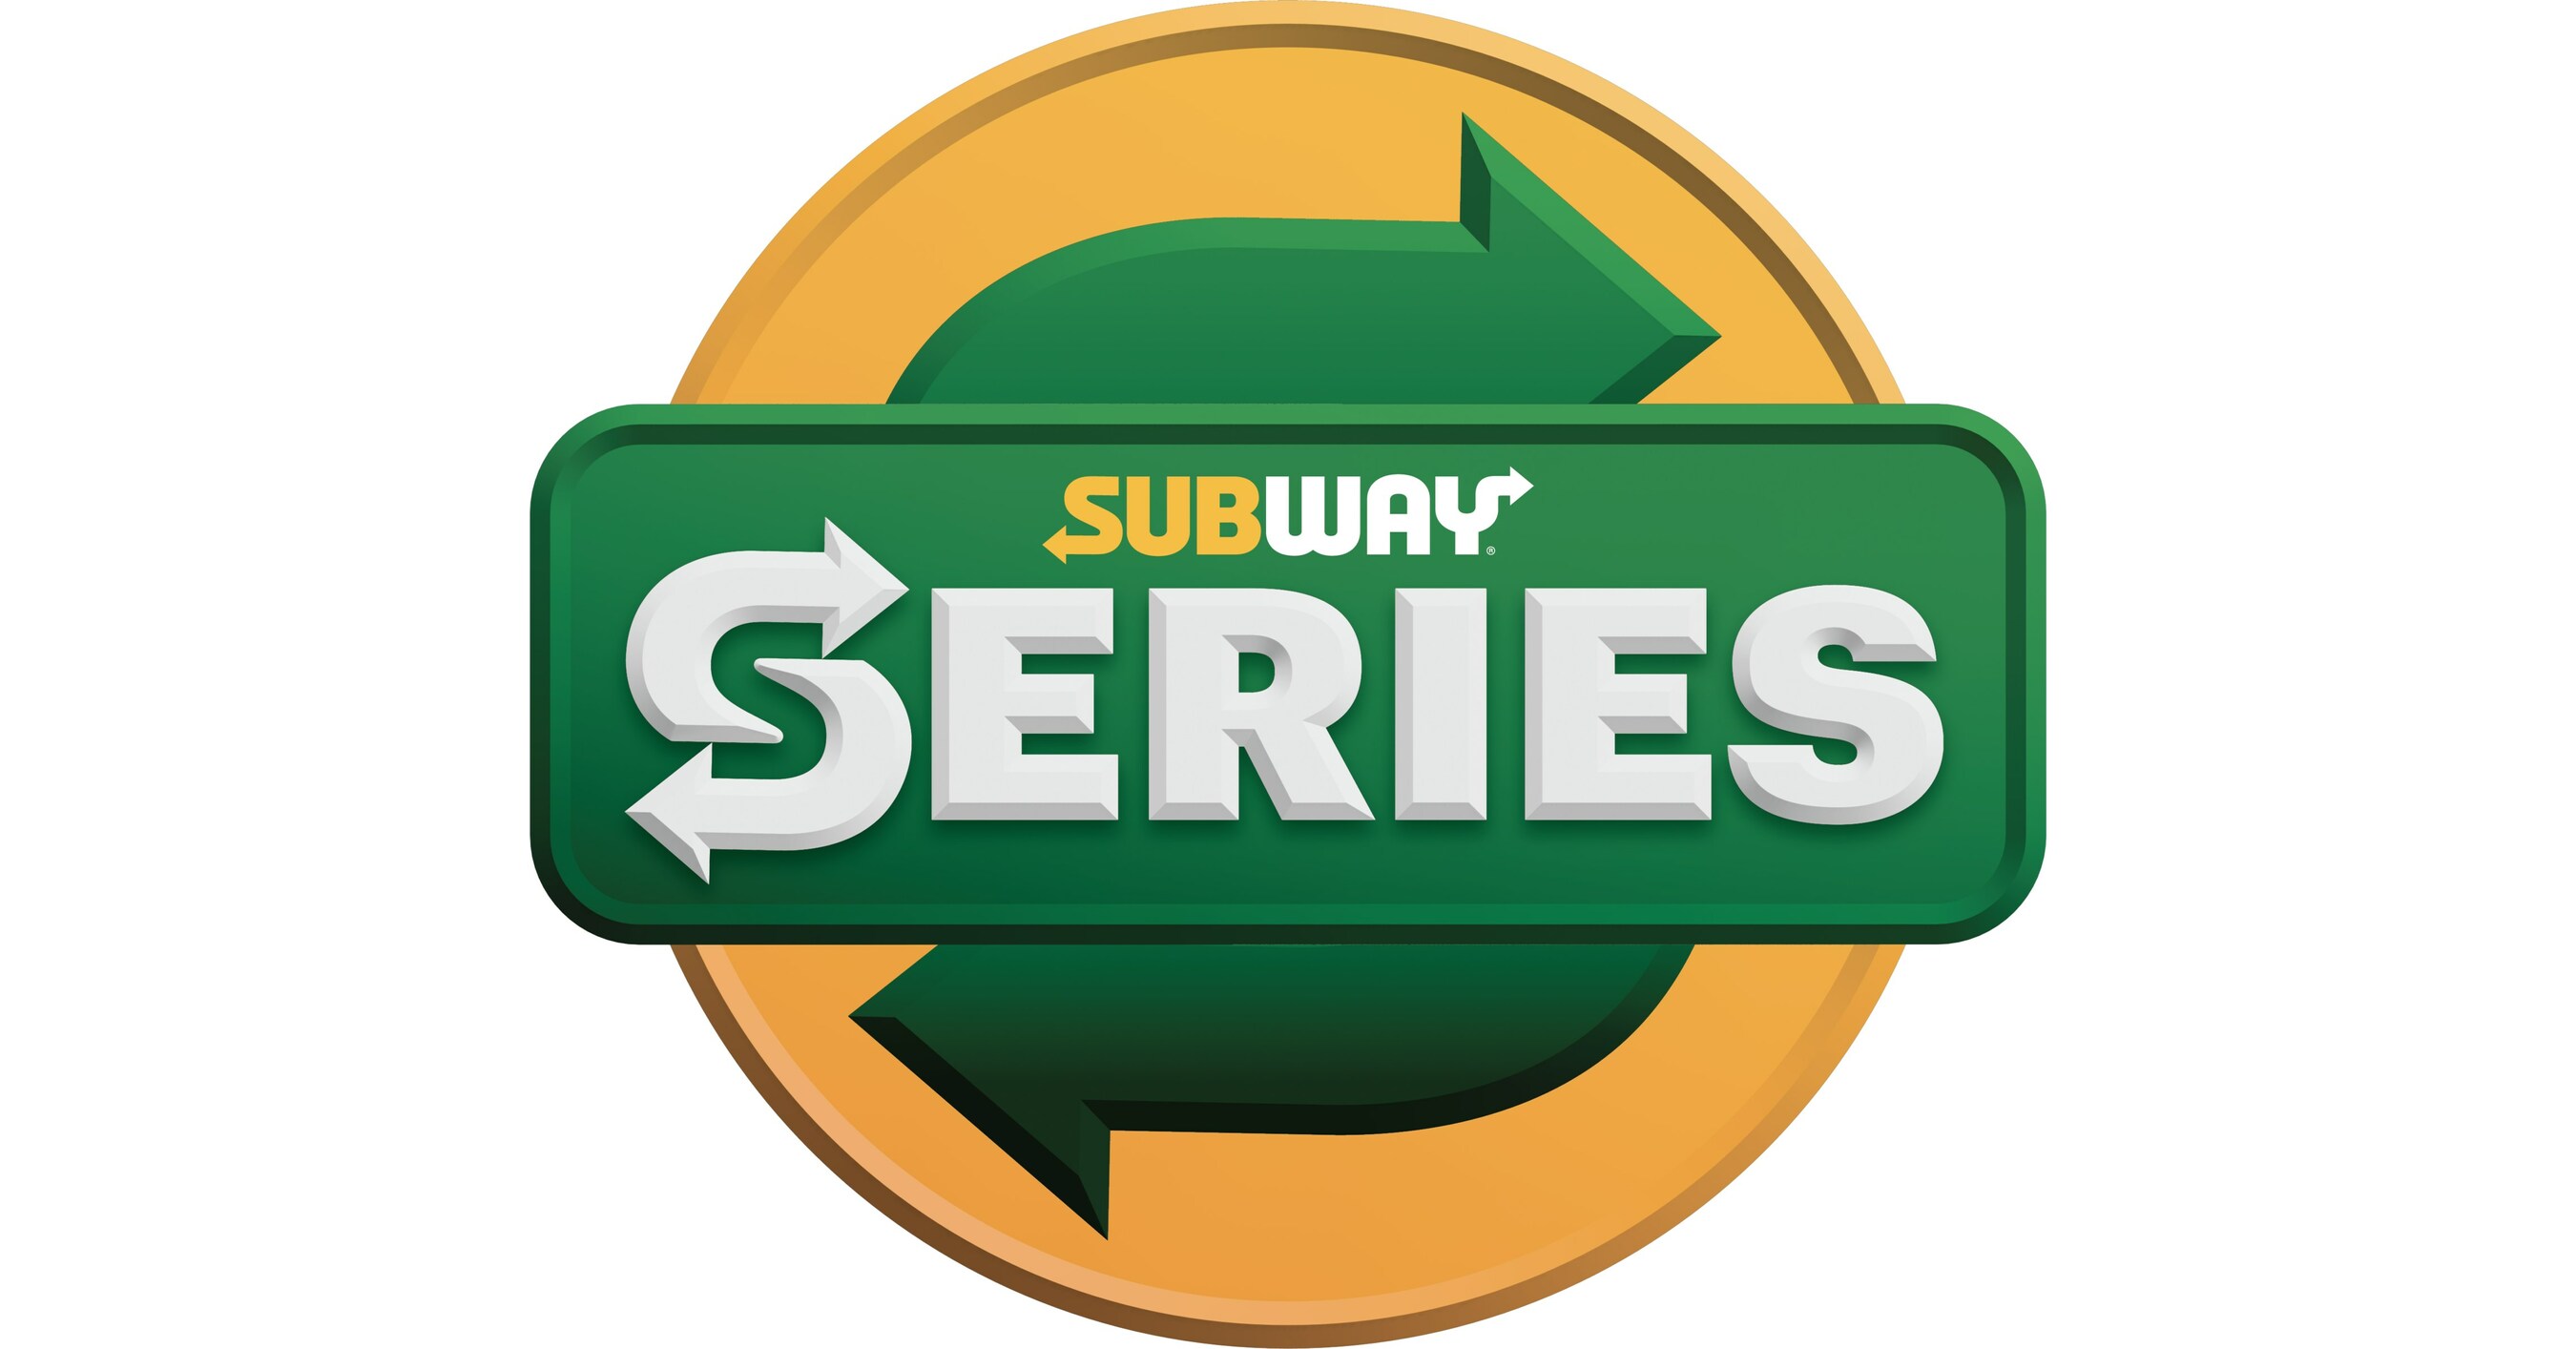 small subway sandwich restaurant logo